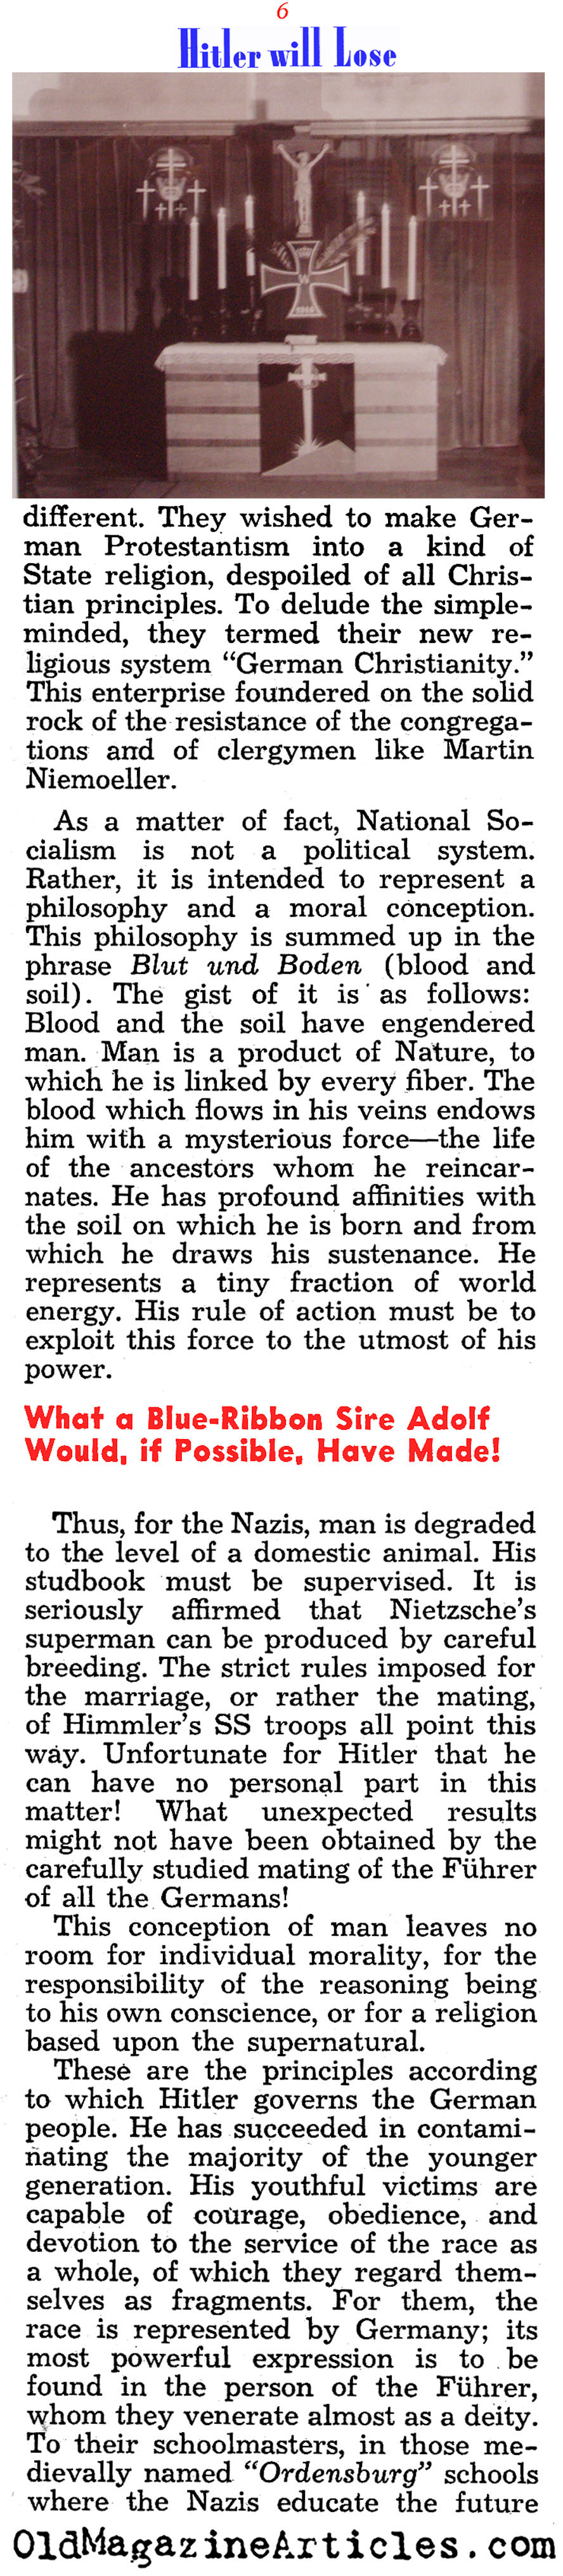 Fritz Thyssen on Hitler (Liberty Magazine, 1941)